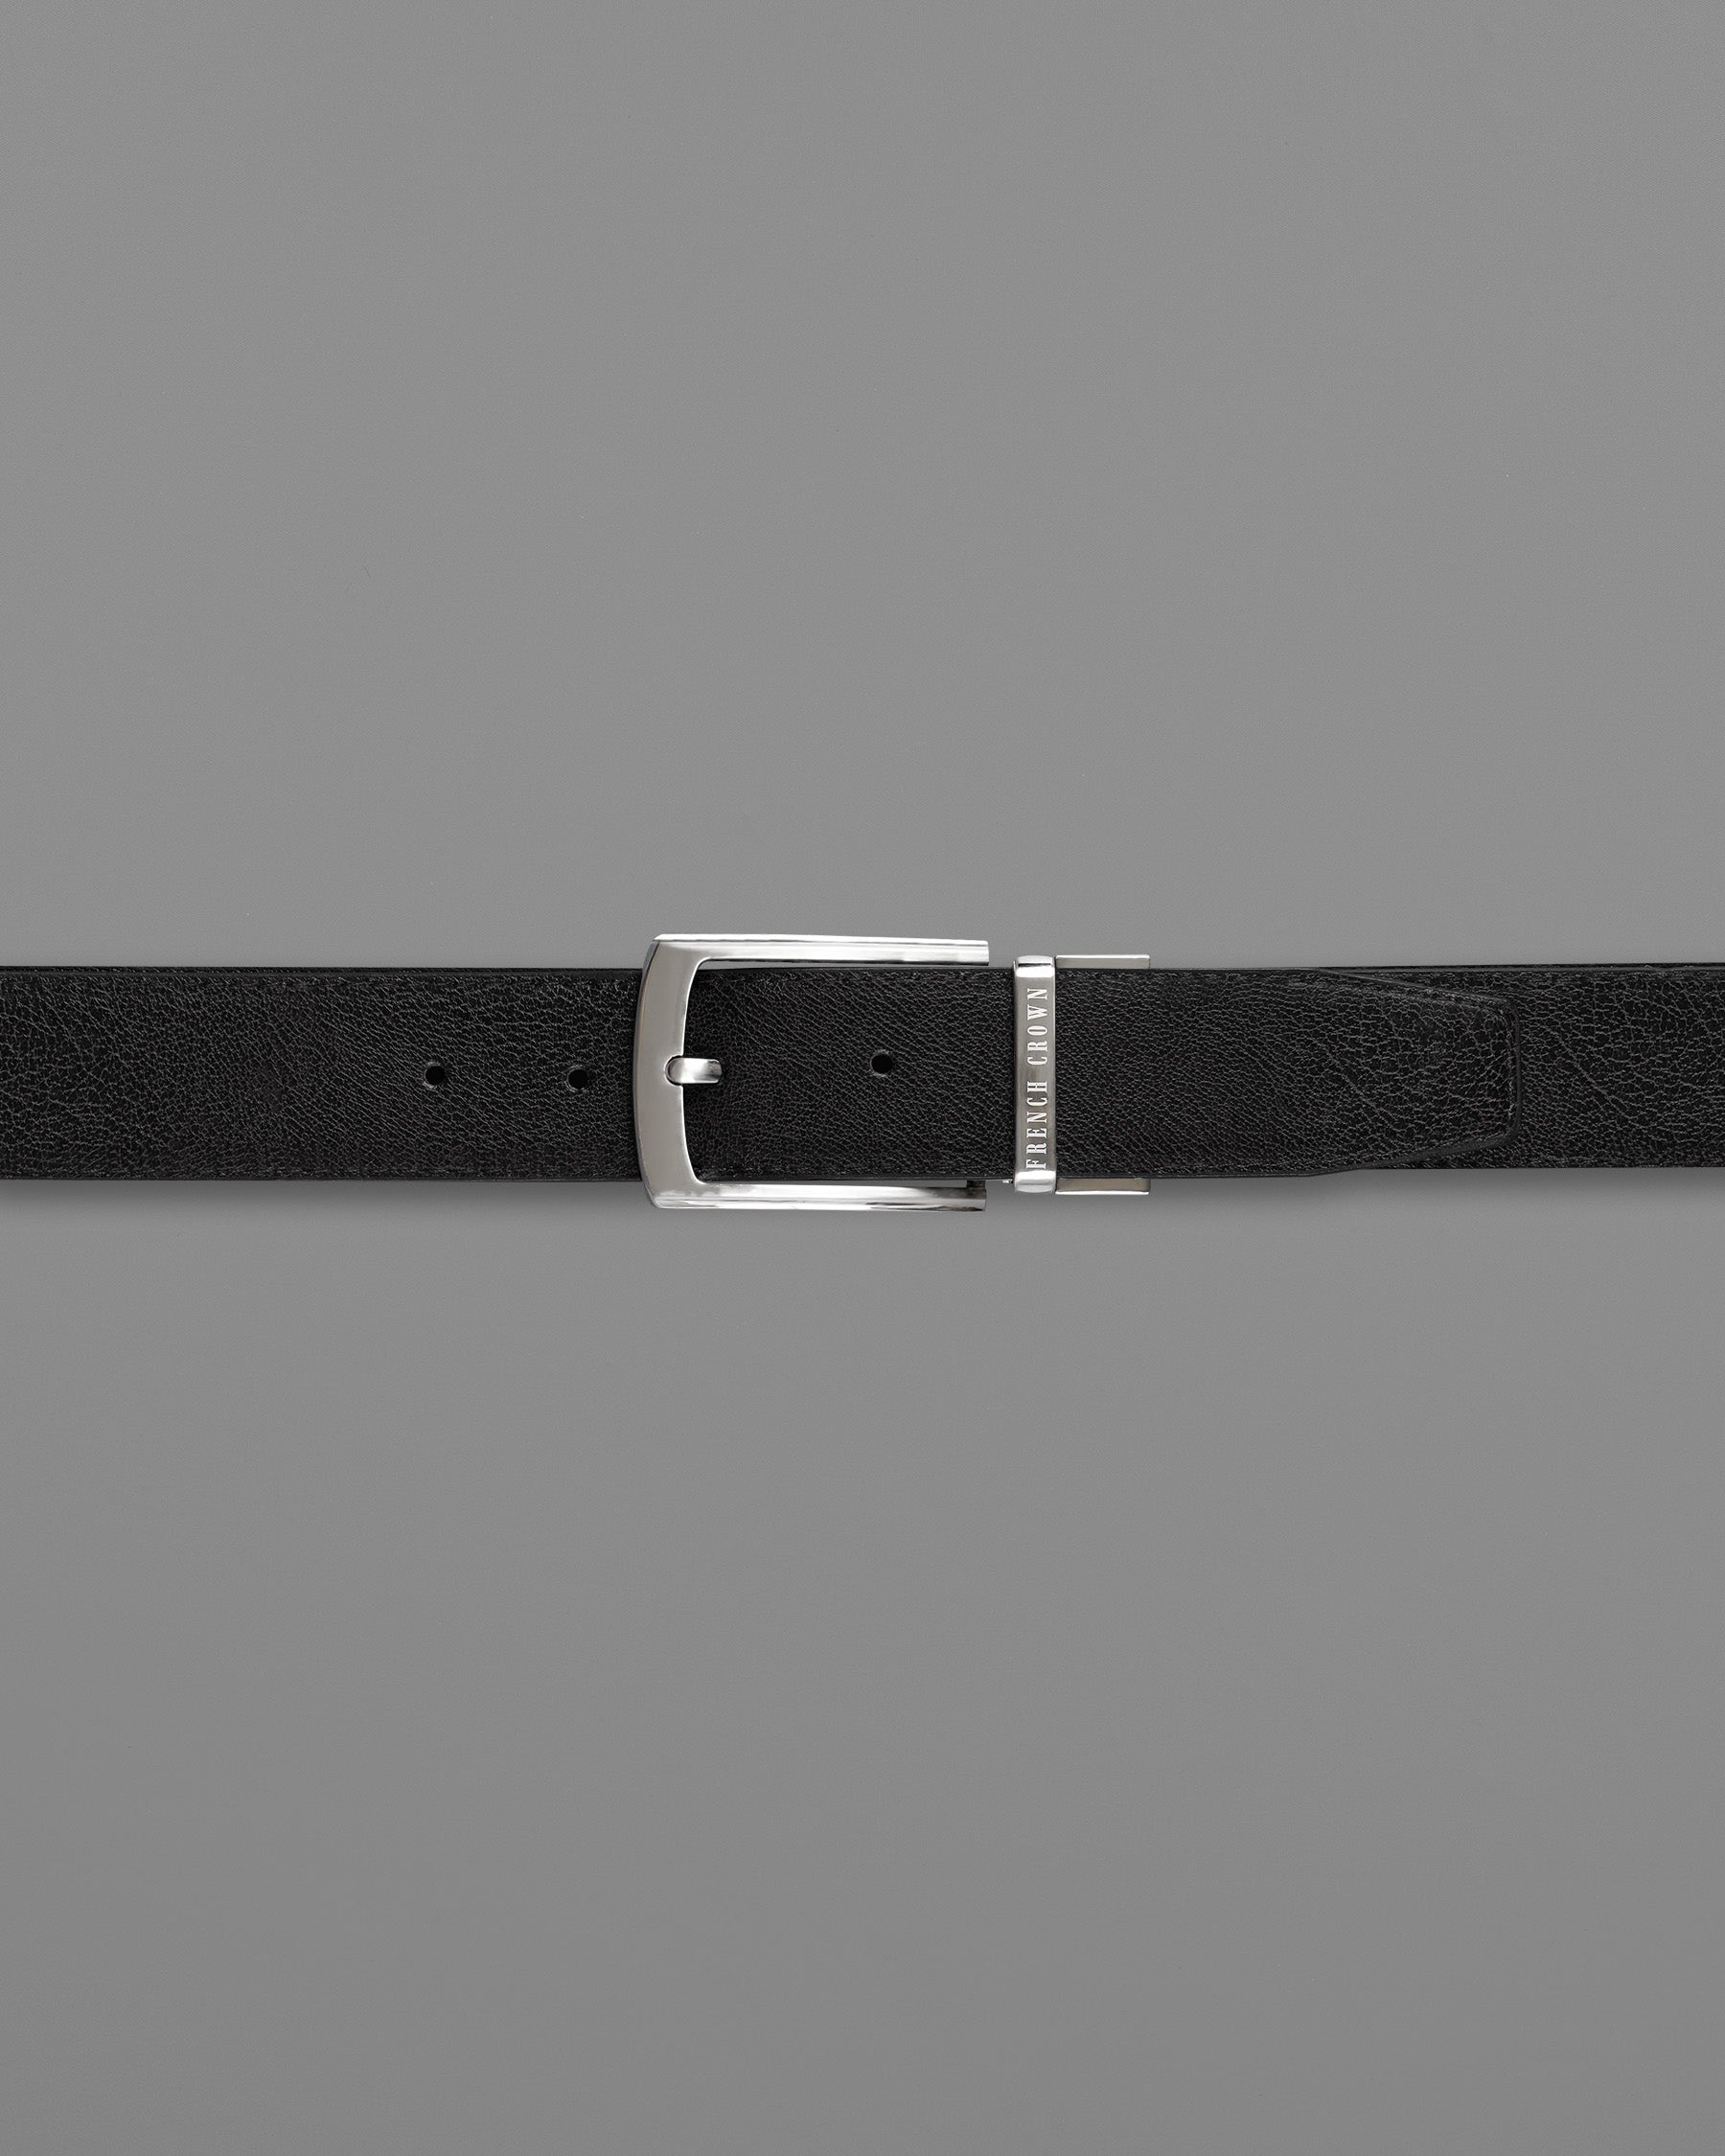 Silver Metallic Buckle with Jade Black and Brown Leather Free Handcrafted Reversible Belt BT070-28, BT070-30, BT070-32, BT070-34, BT070-36, BT070-38